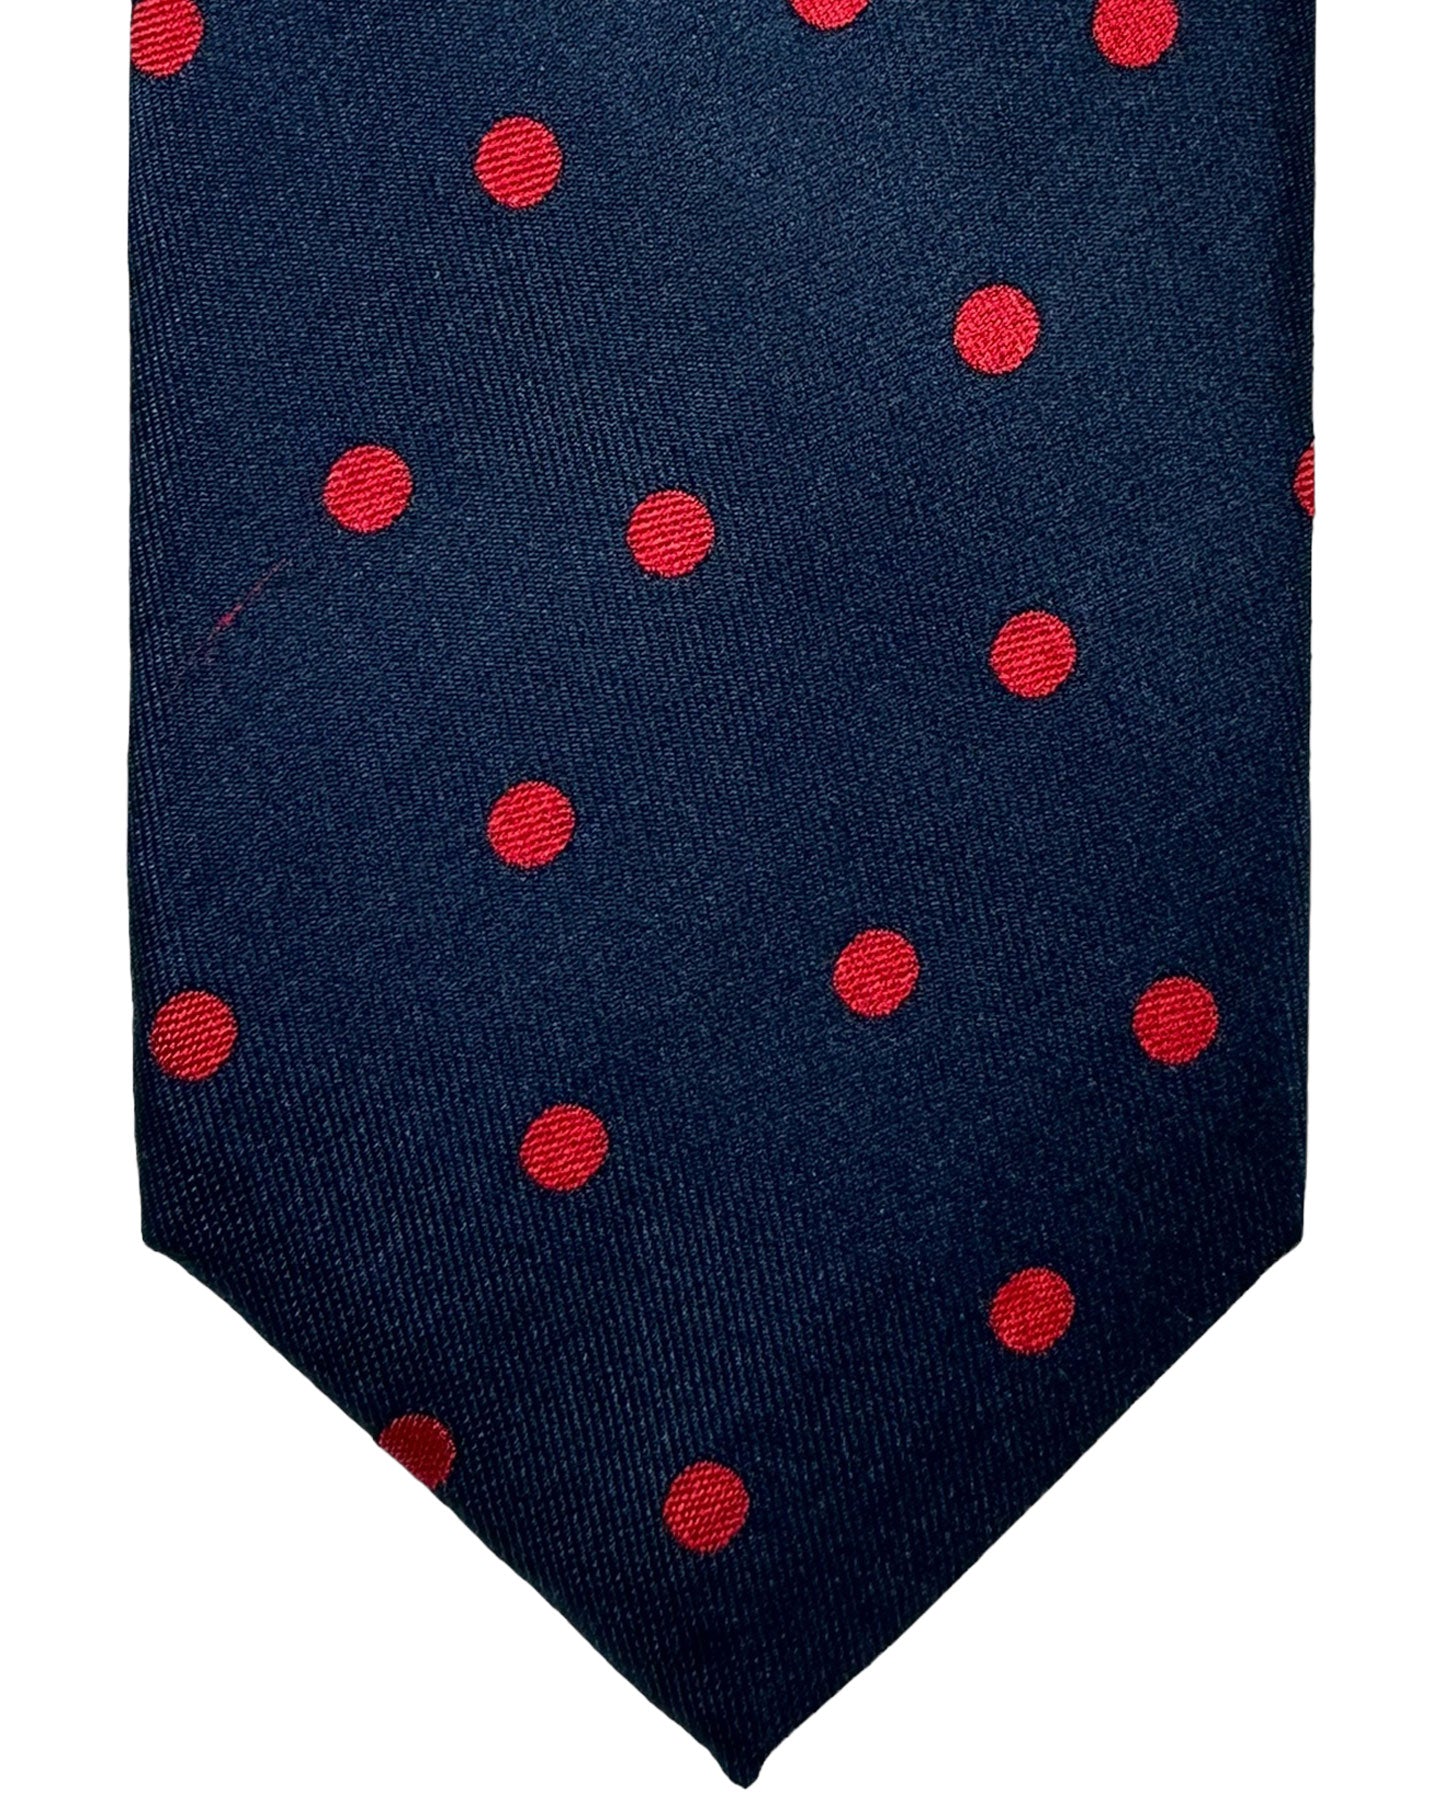 Barba Sevenfold Tie Midnight Blue Dark Red Dots Design - Sartorial Neckwear